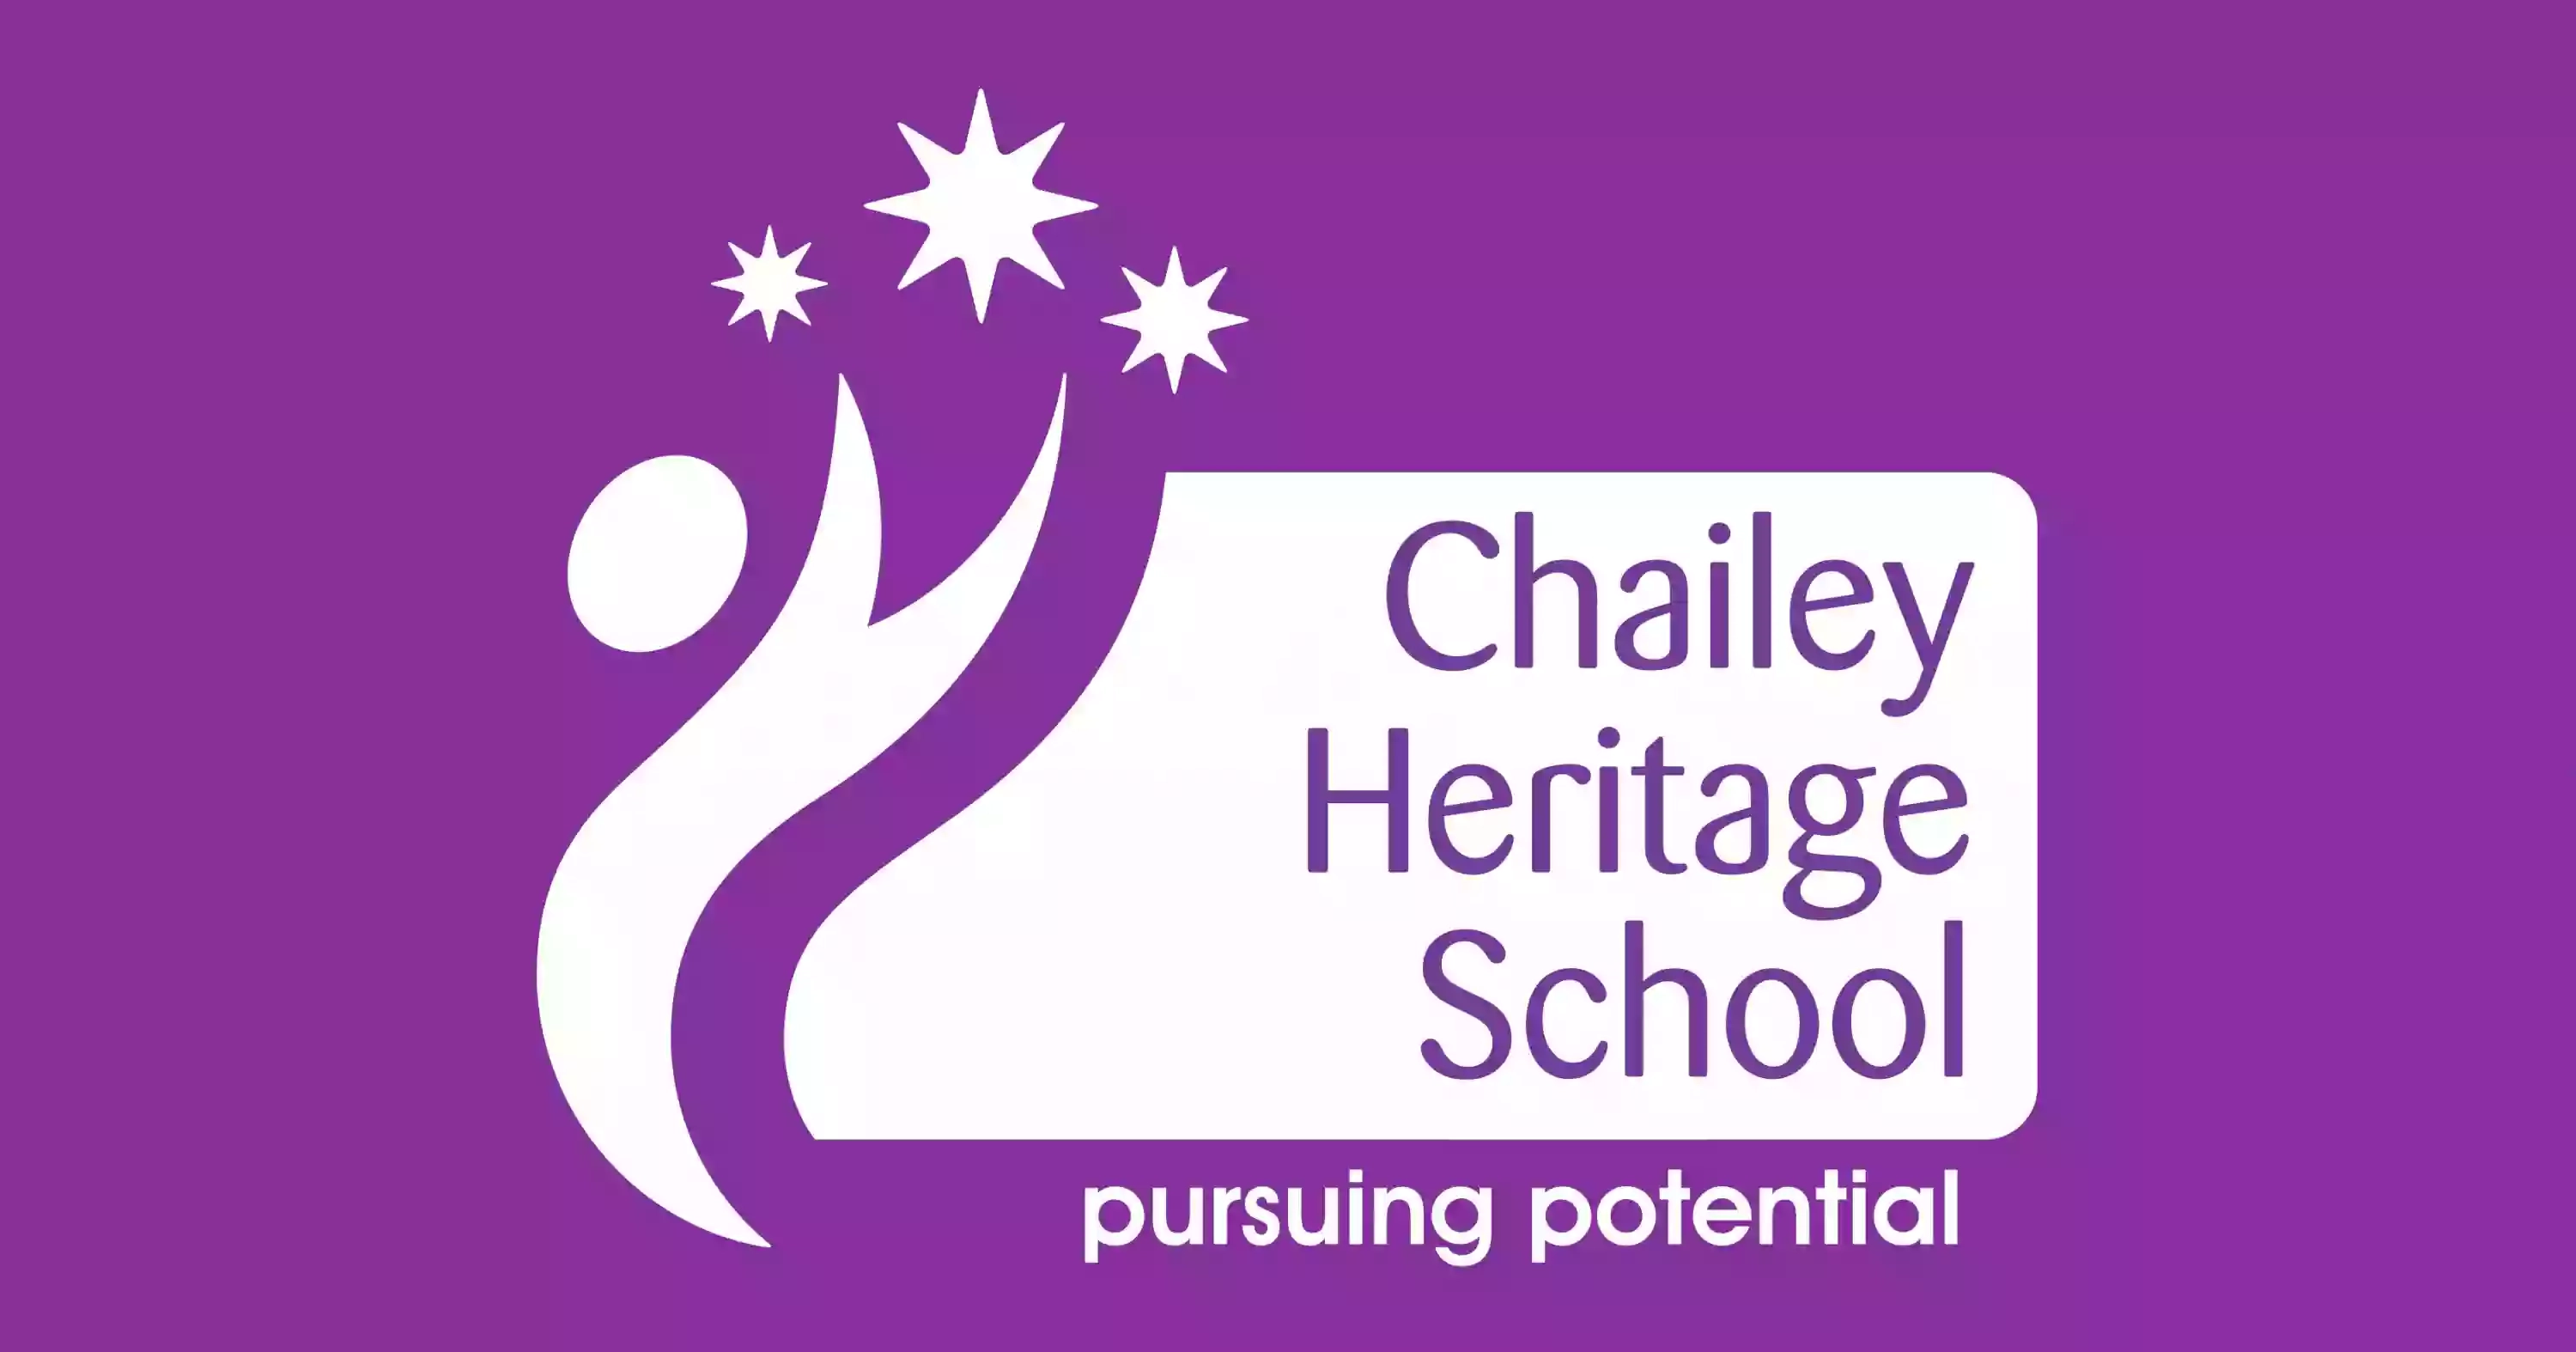 Chailey Heritage School